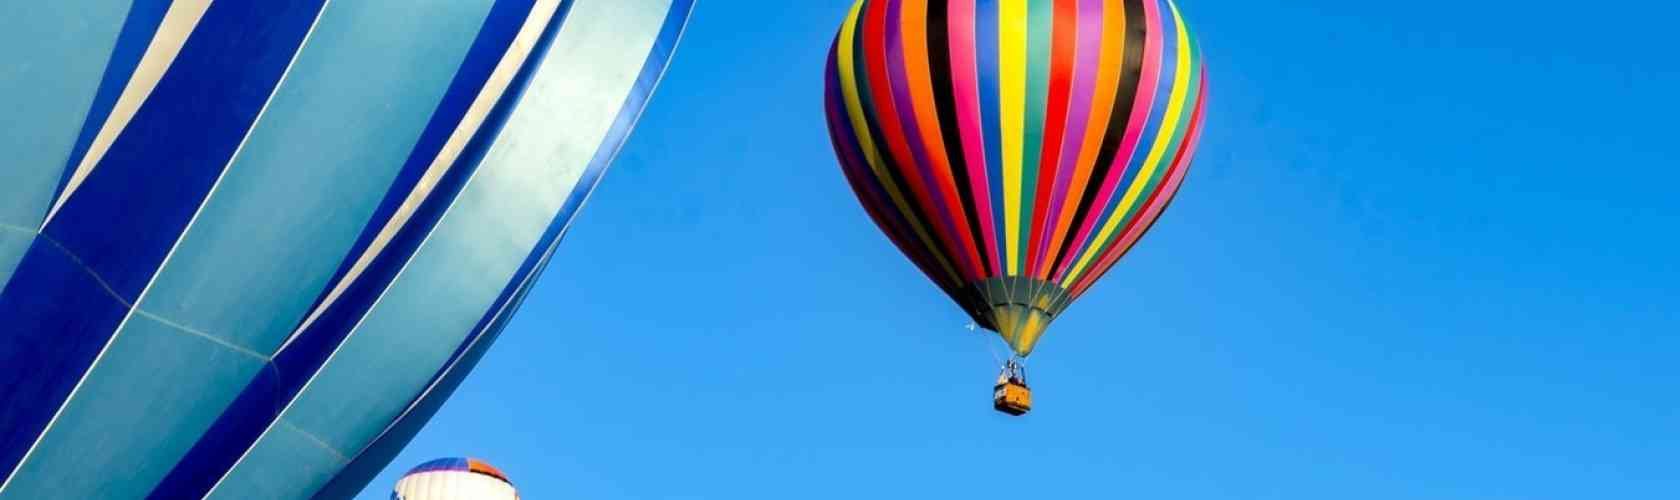 Hot air balloons 1